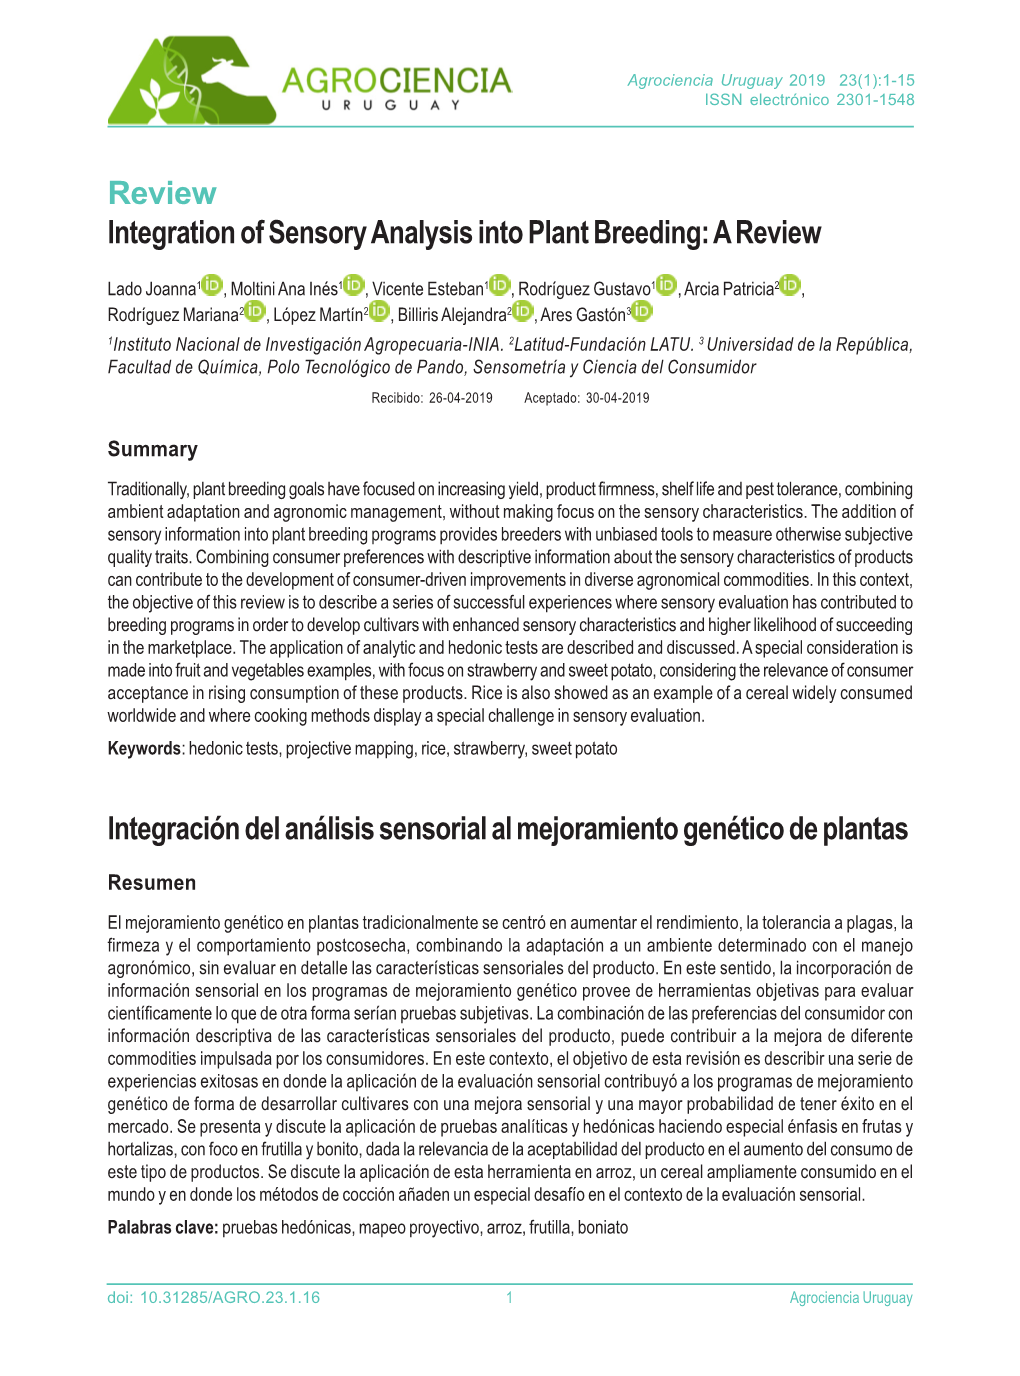 Integration of Sensory Analysis Into Plant Breeding: a Review